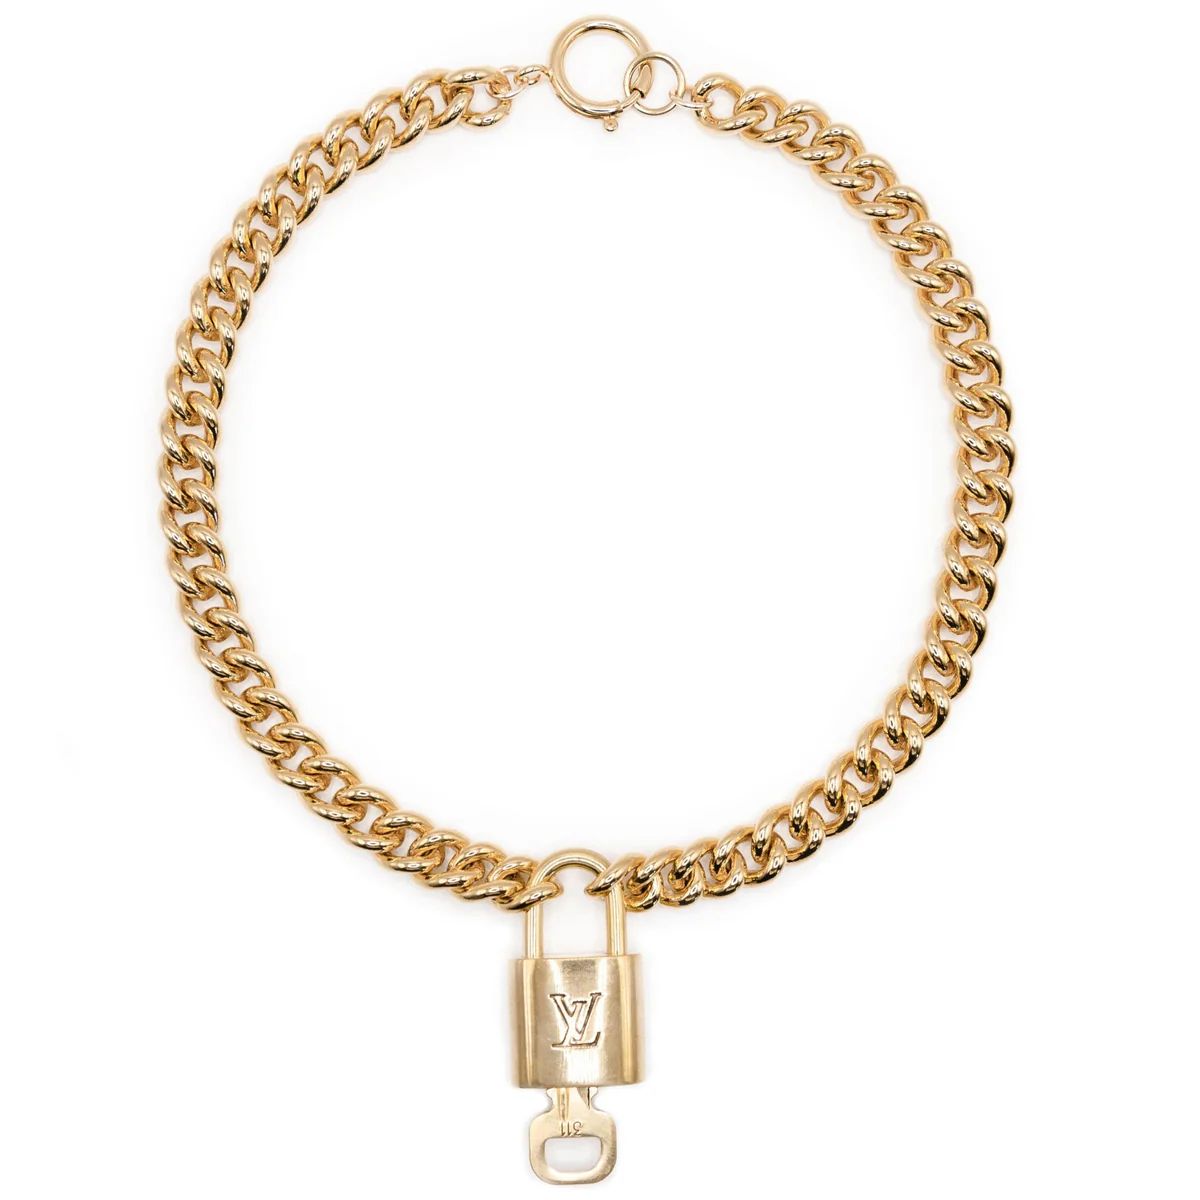 Vintage Louis Vuitton Lock Necklace 2.0 | Erin Fader Jewelry Design